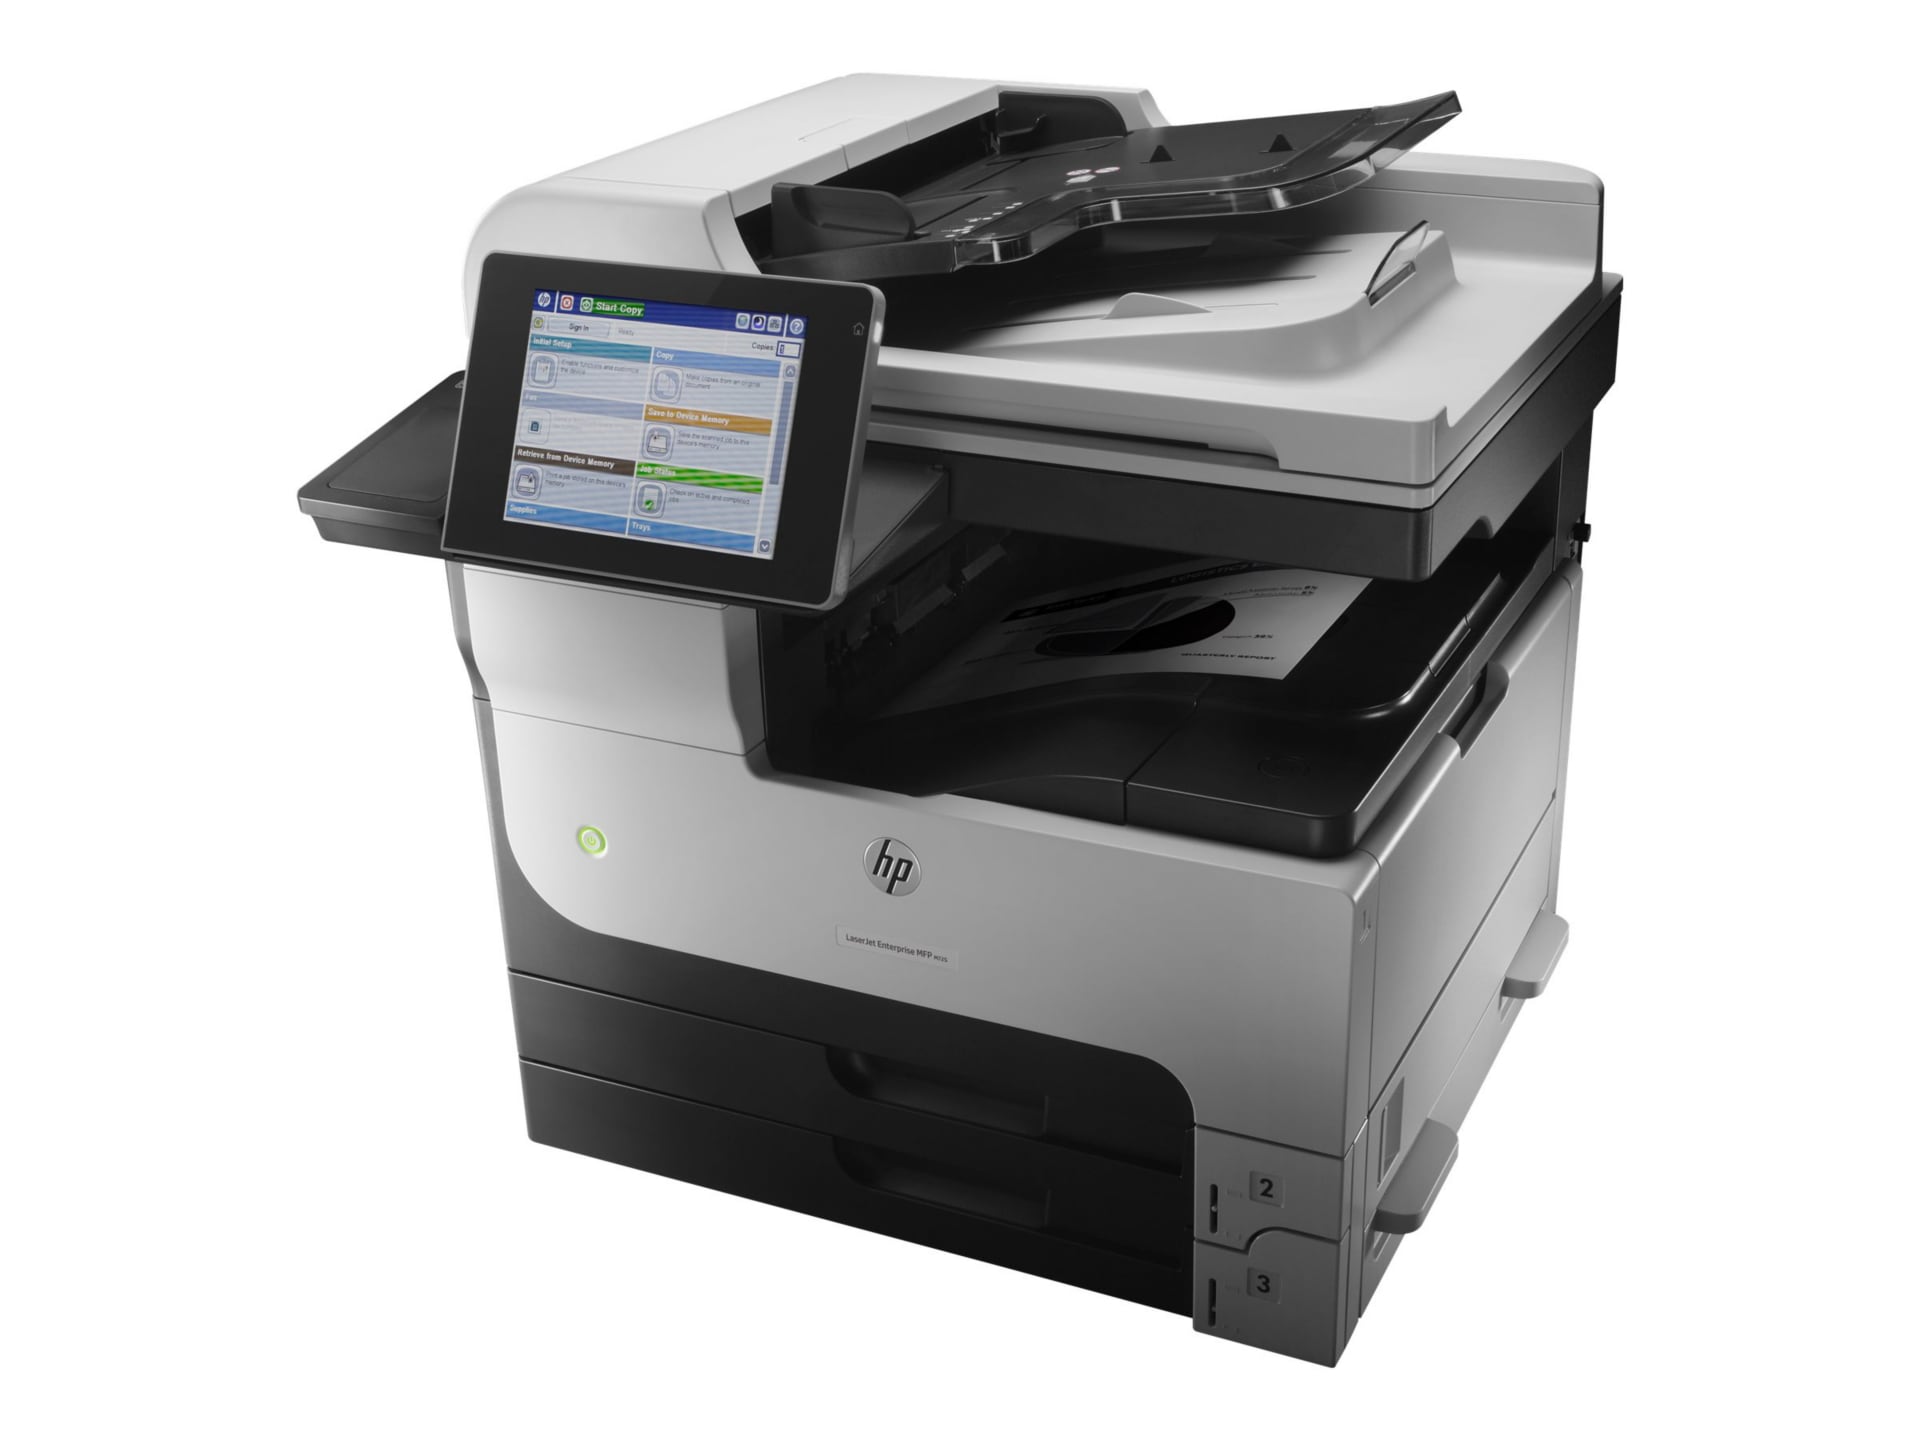 HP LaserJet Enterprise MFP M725dn - multifunction printer - B/W - CF066A#BGJ - All-in-One Printers -